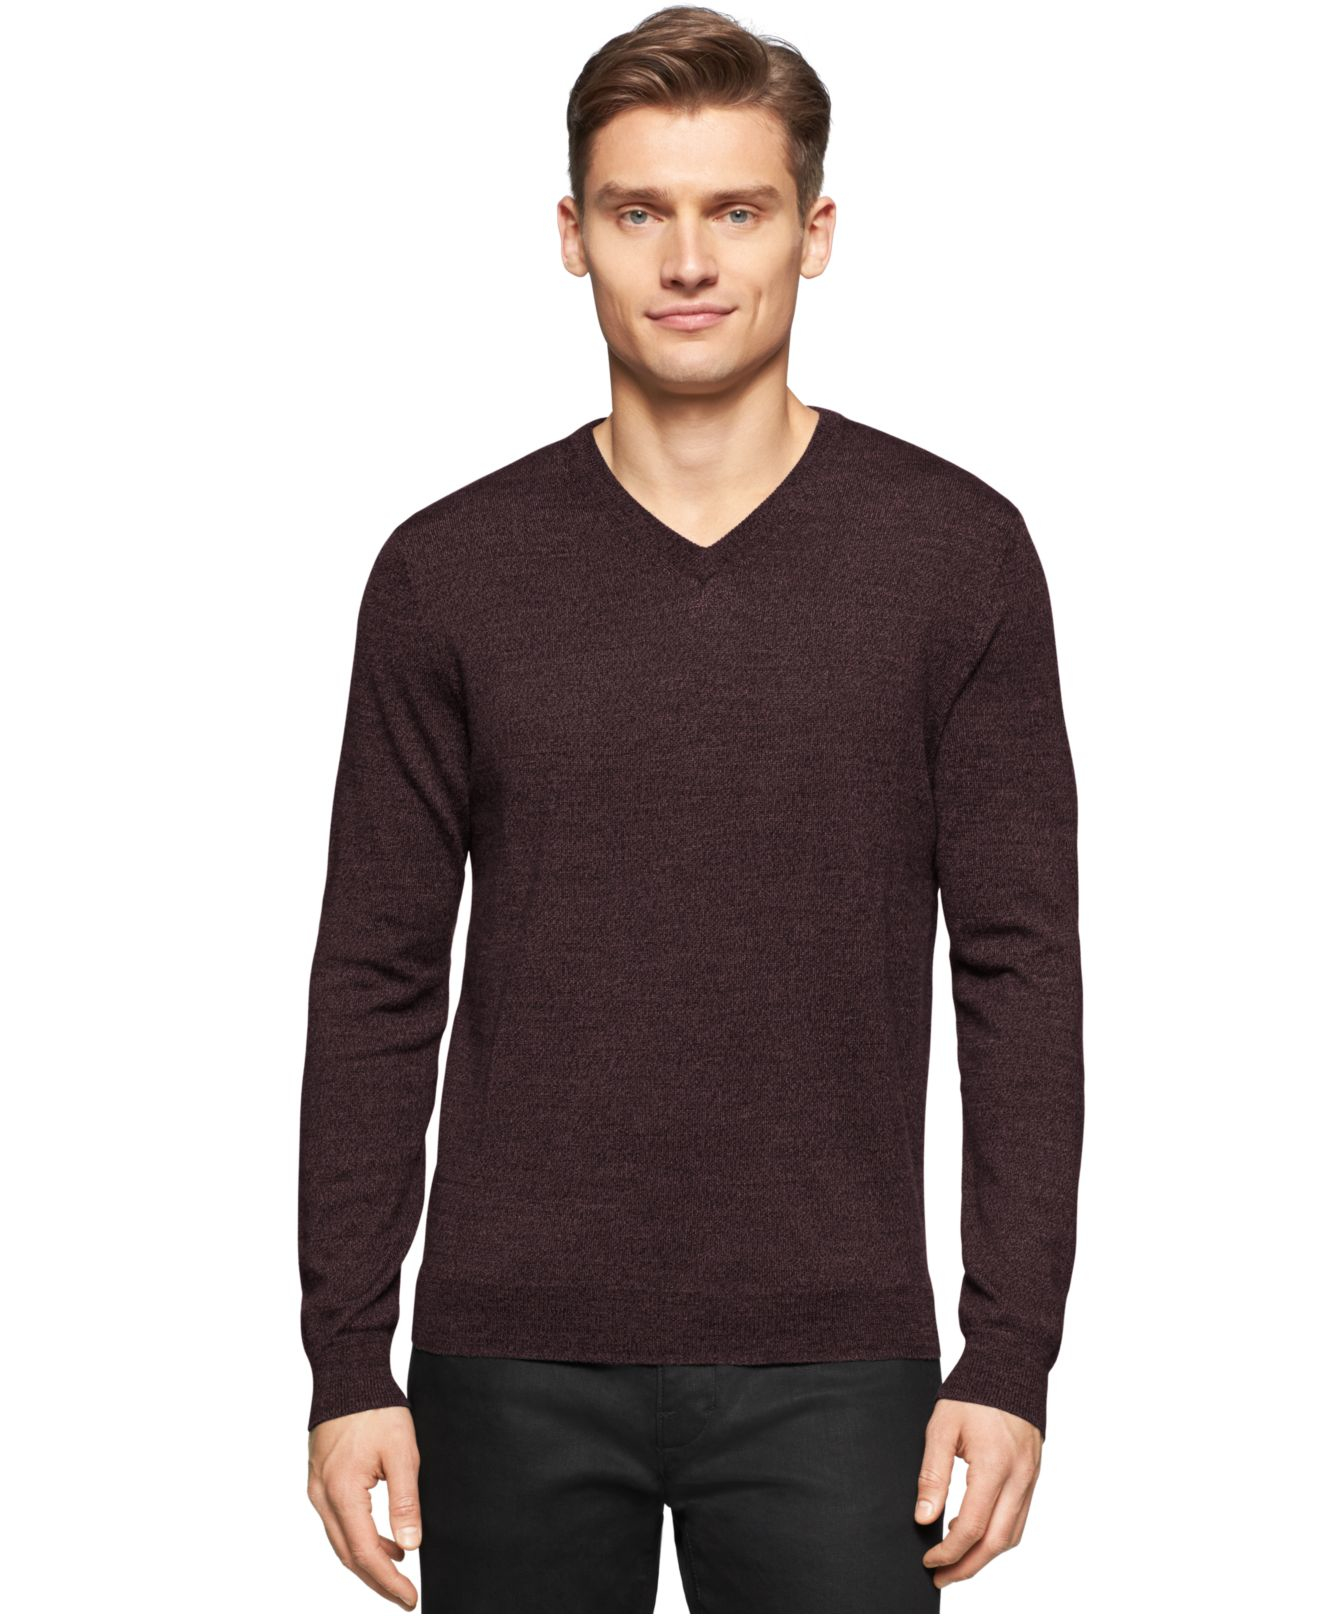 Lyst - Calvin Klein Merino Wool V-neck Sweater in Brown for Men